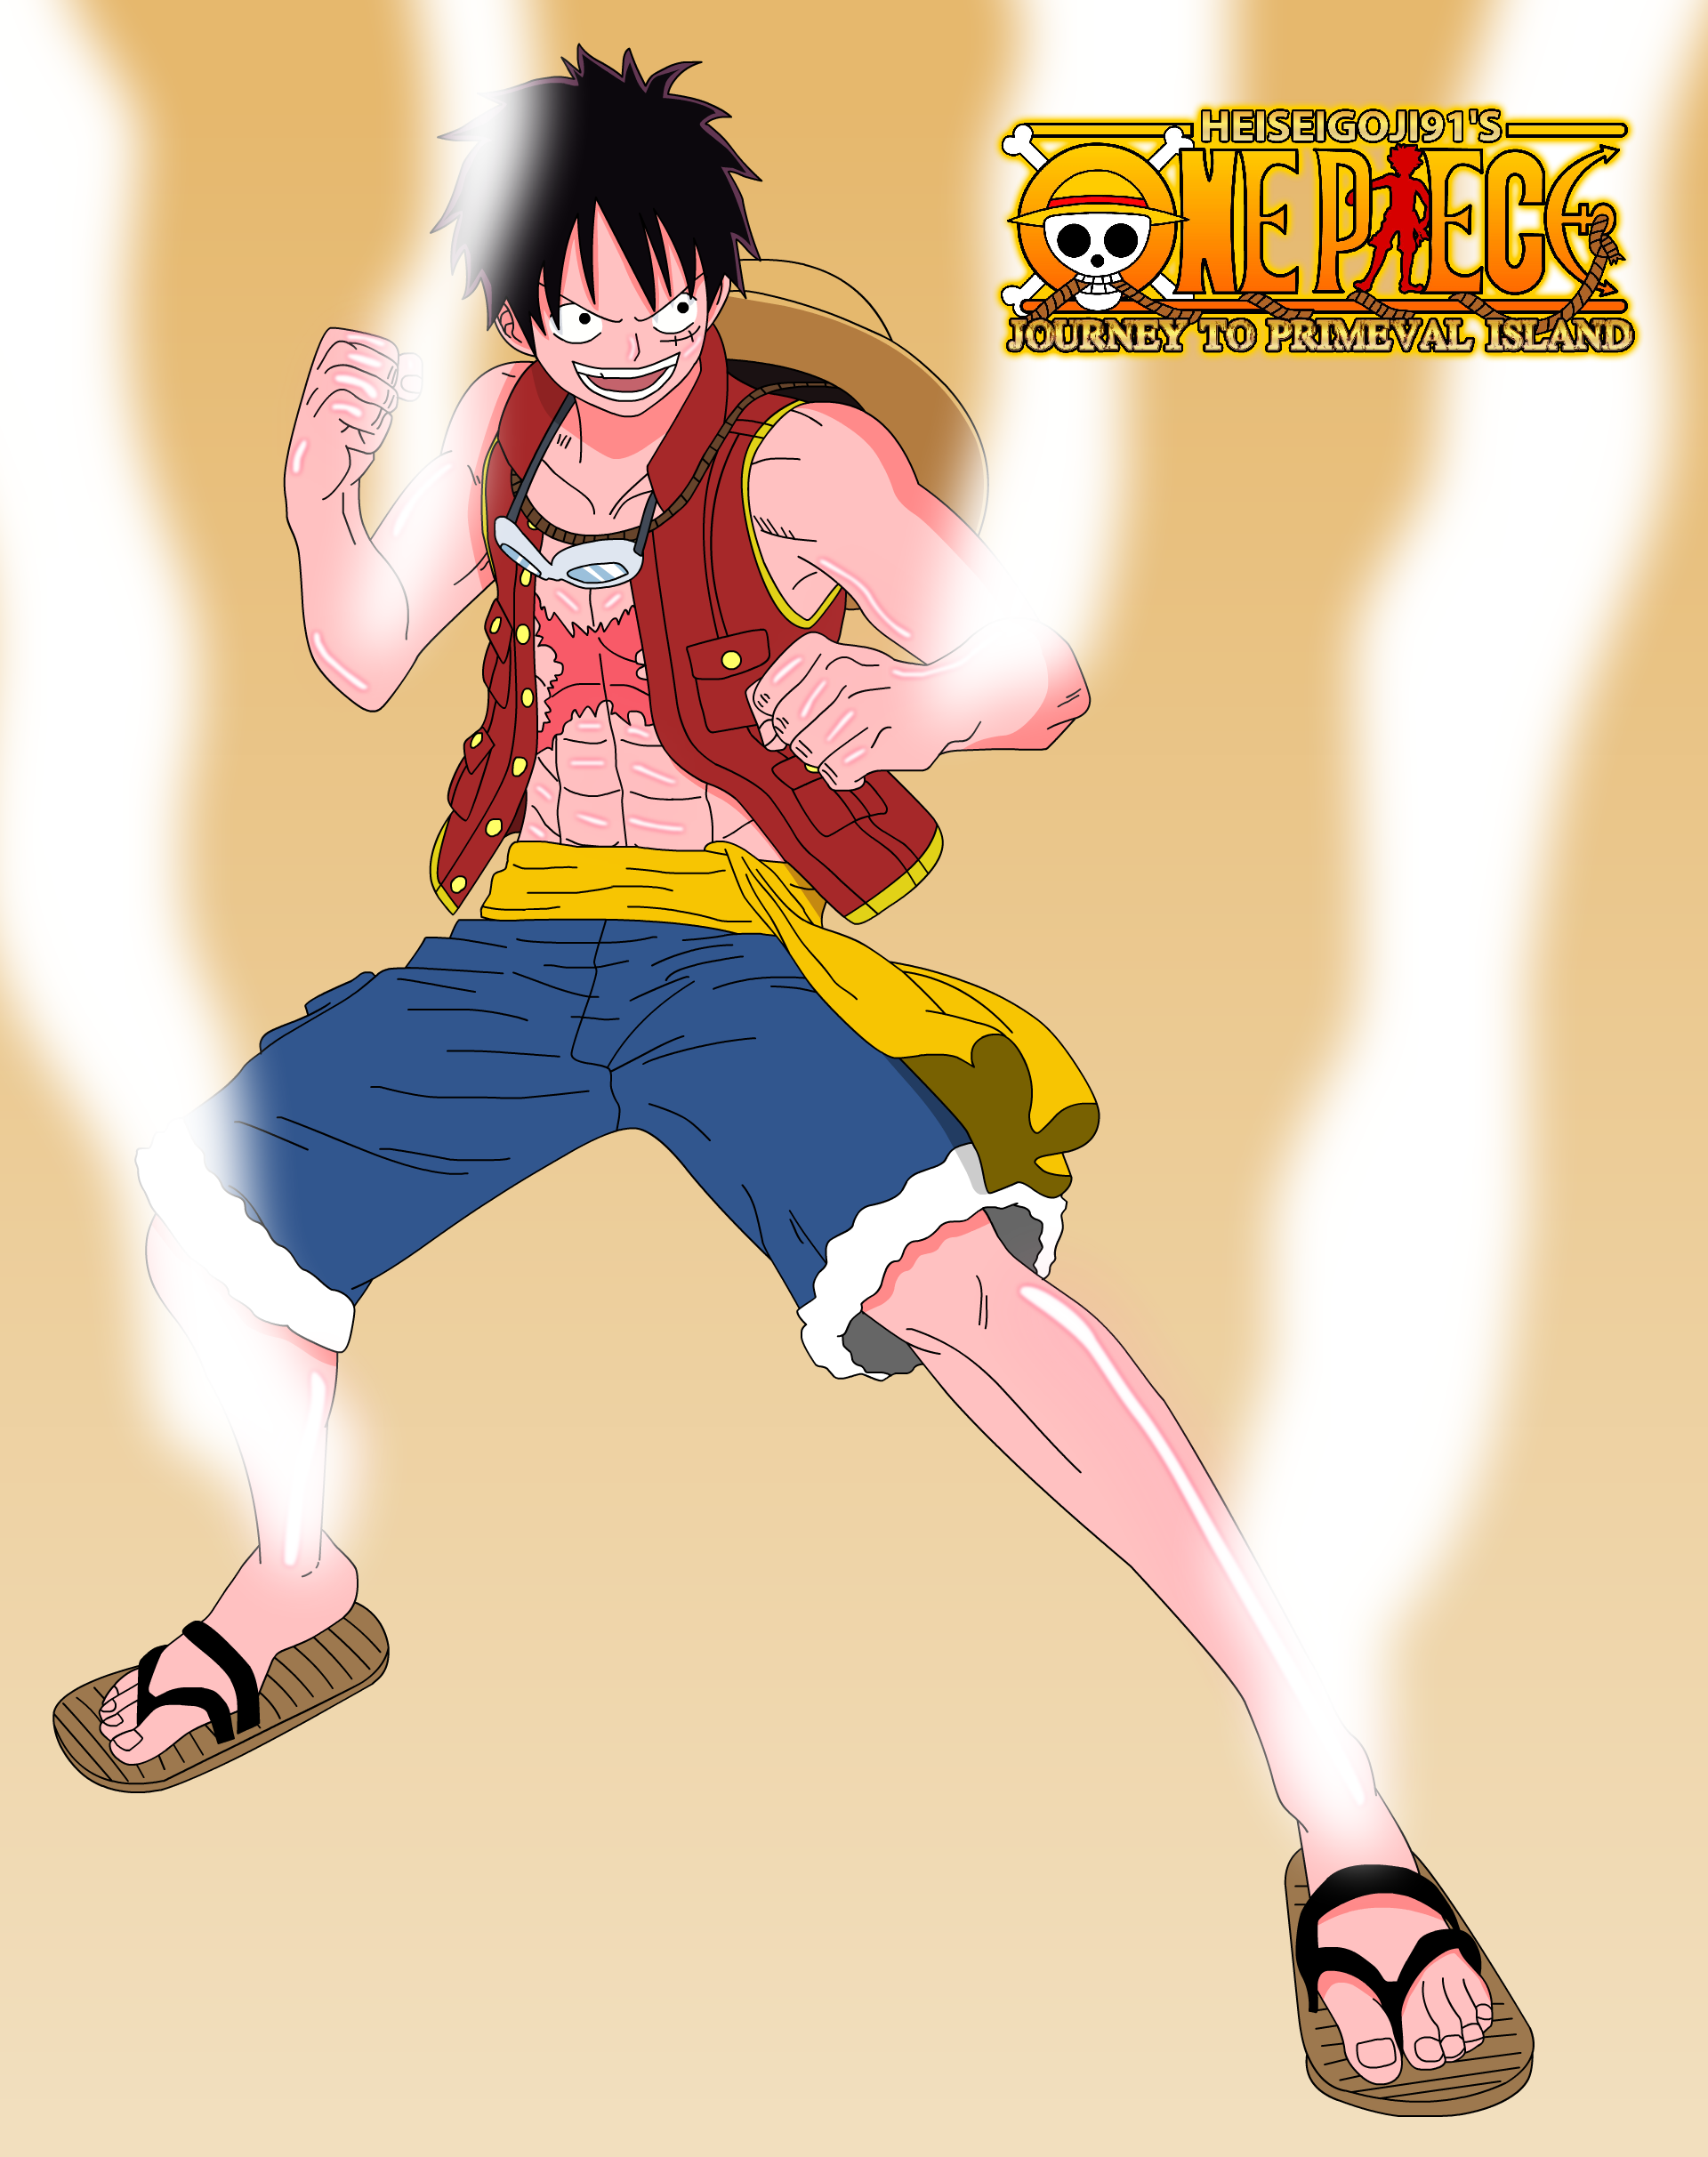 Luffy gear second  •One Piece• Amino